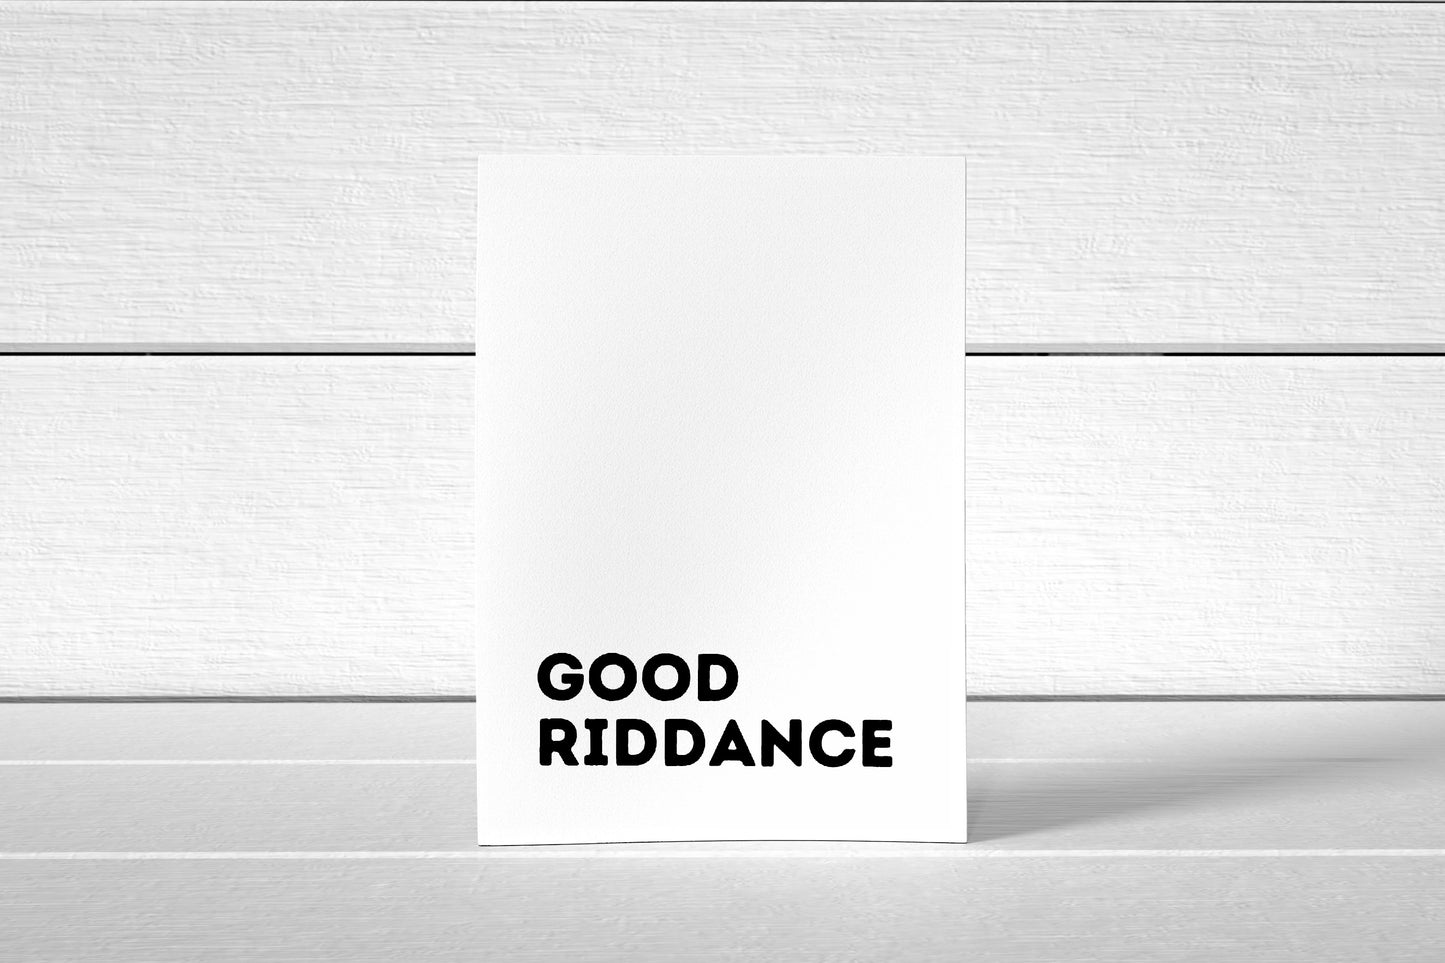 New Job Card | Good Riddance | Funny Card